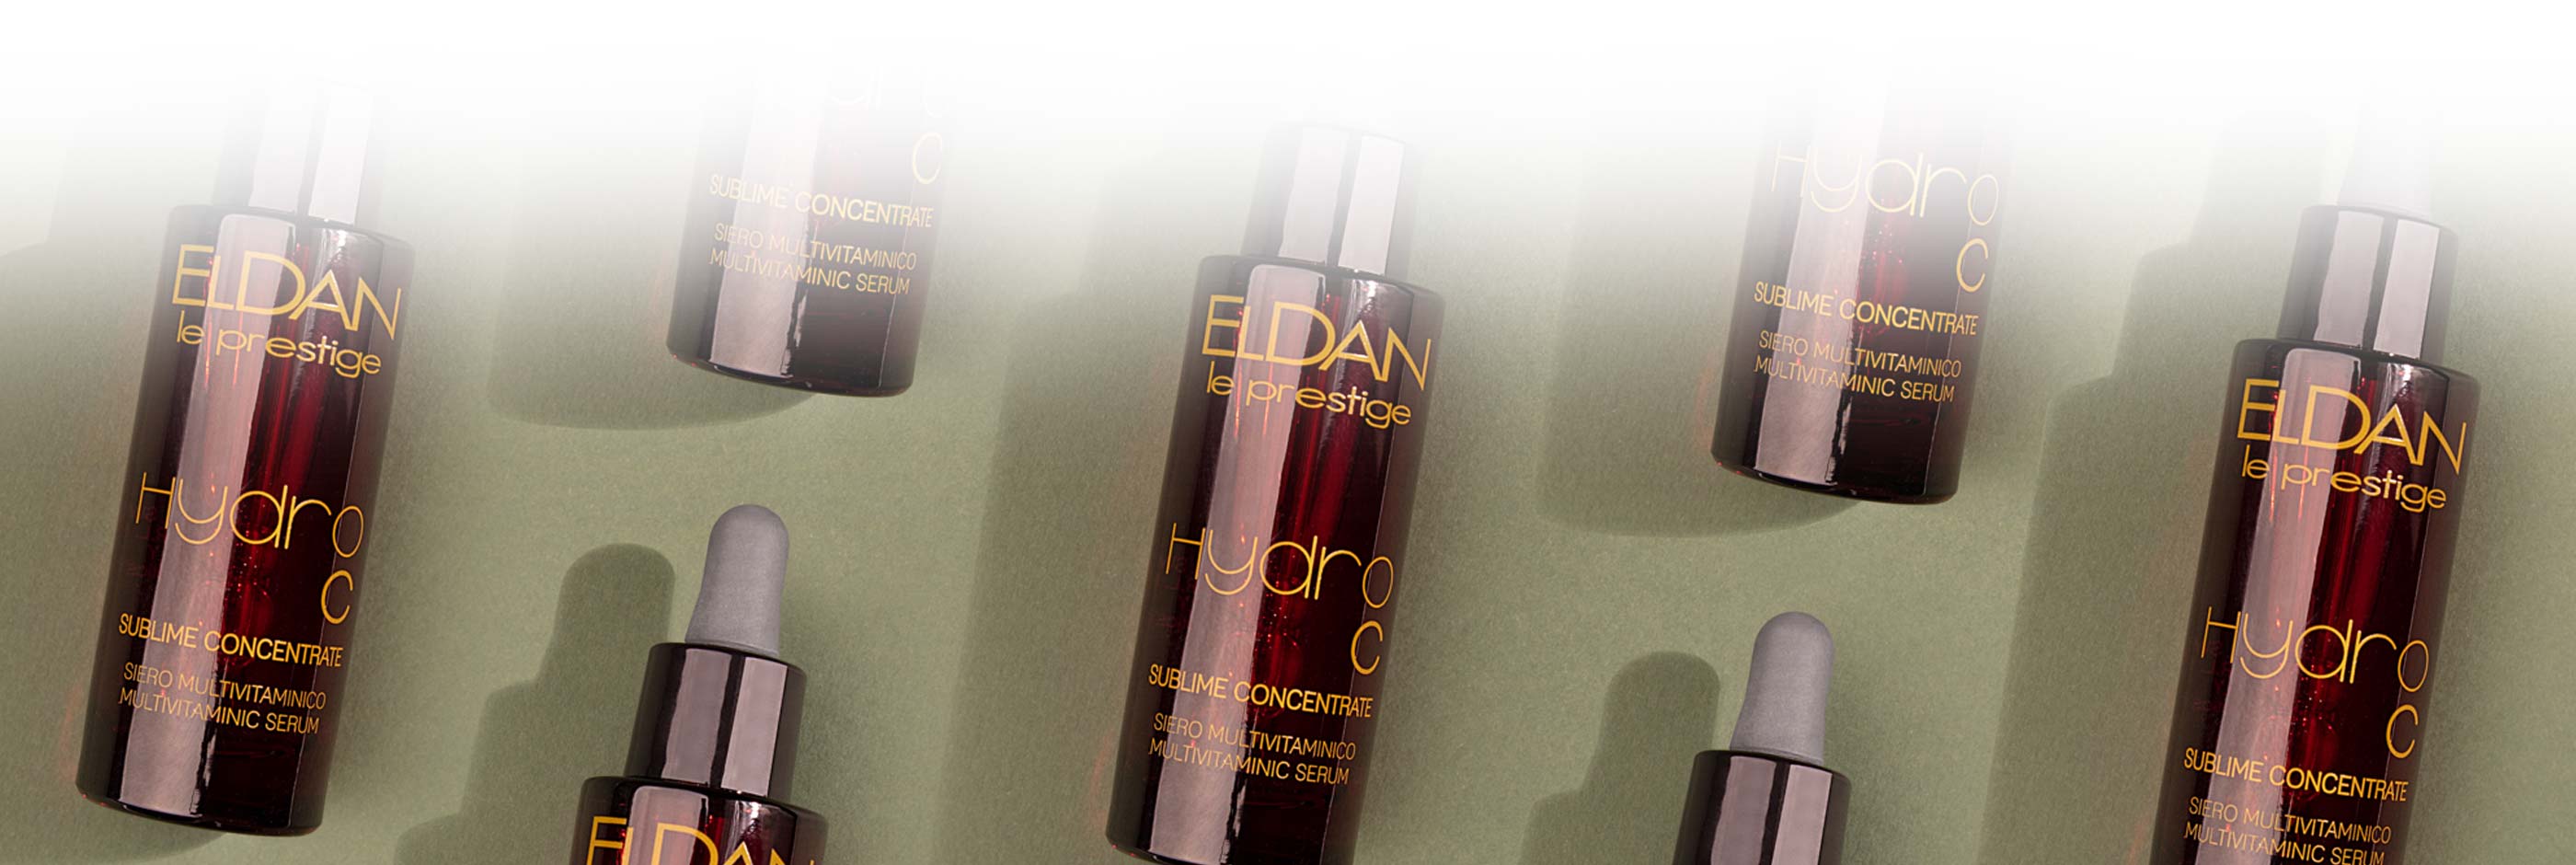 Eldan Cosmetics - News